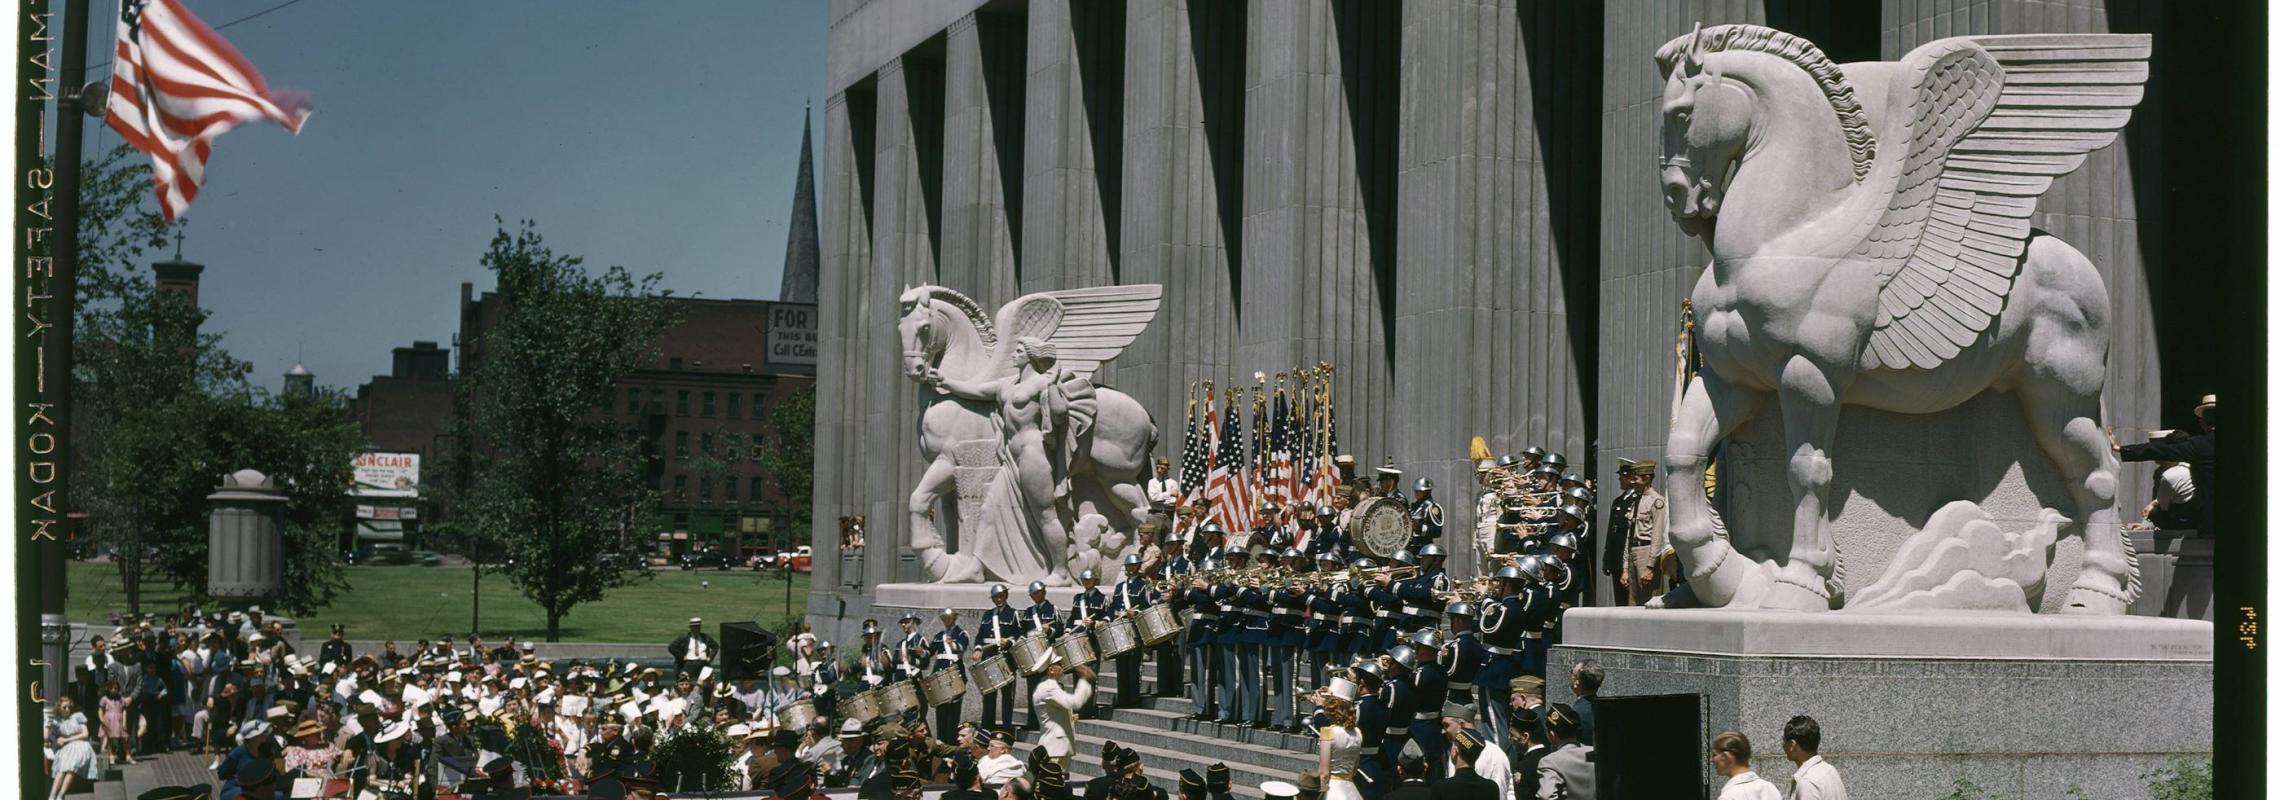 Soldier's Memorial in St. Louis